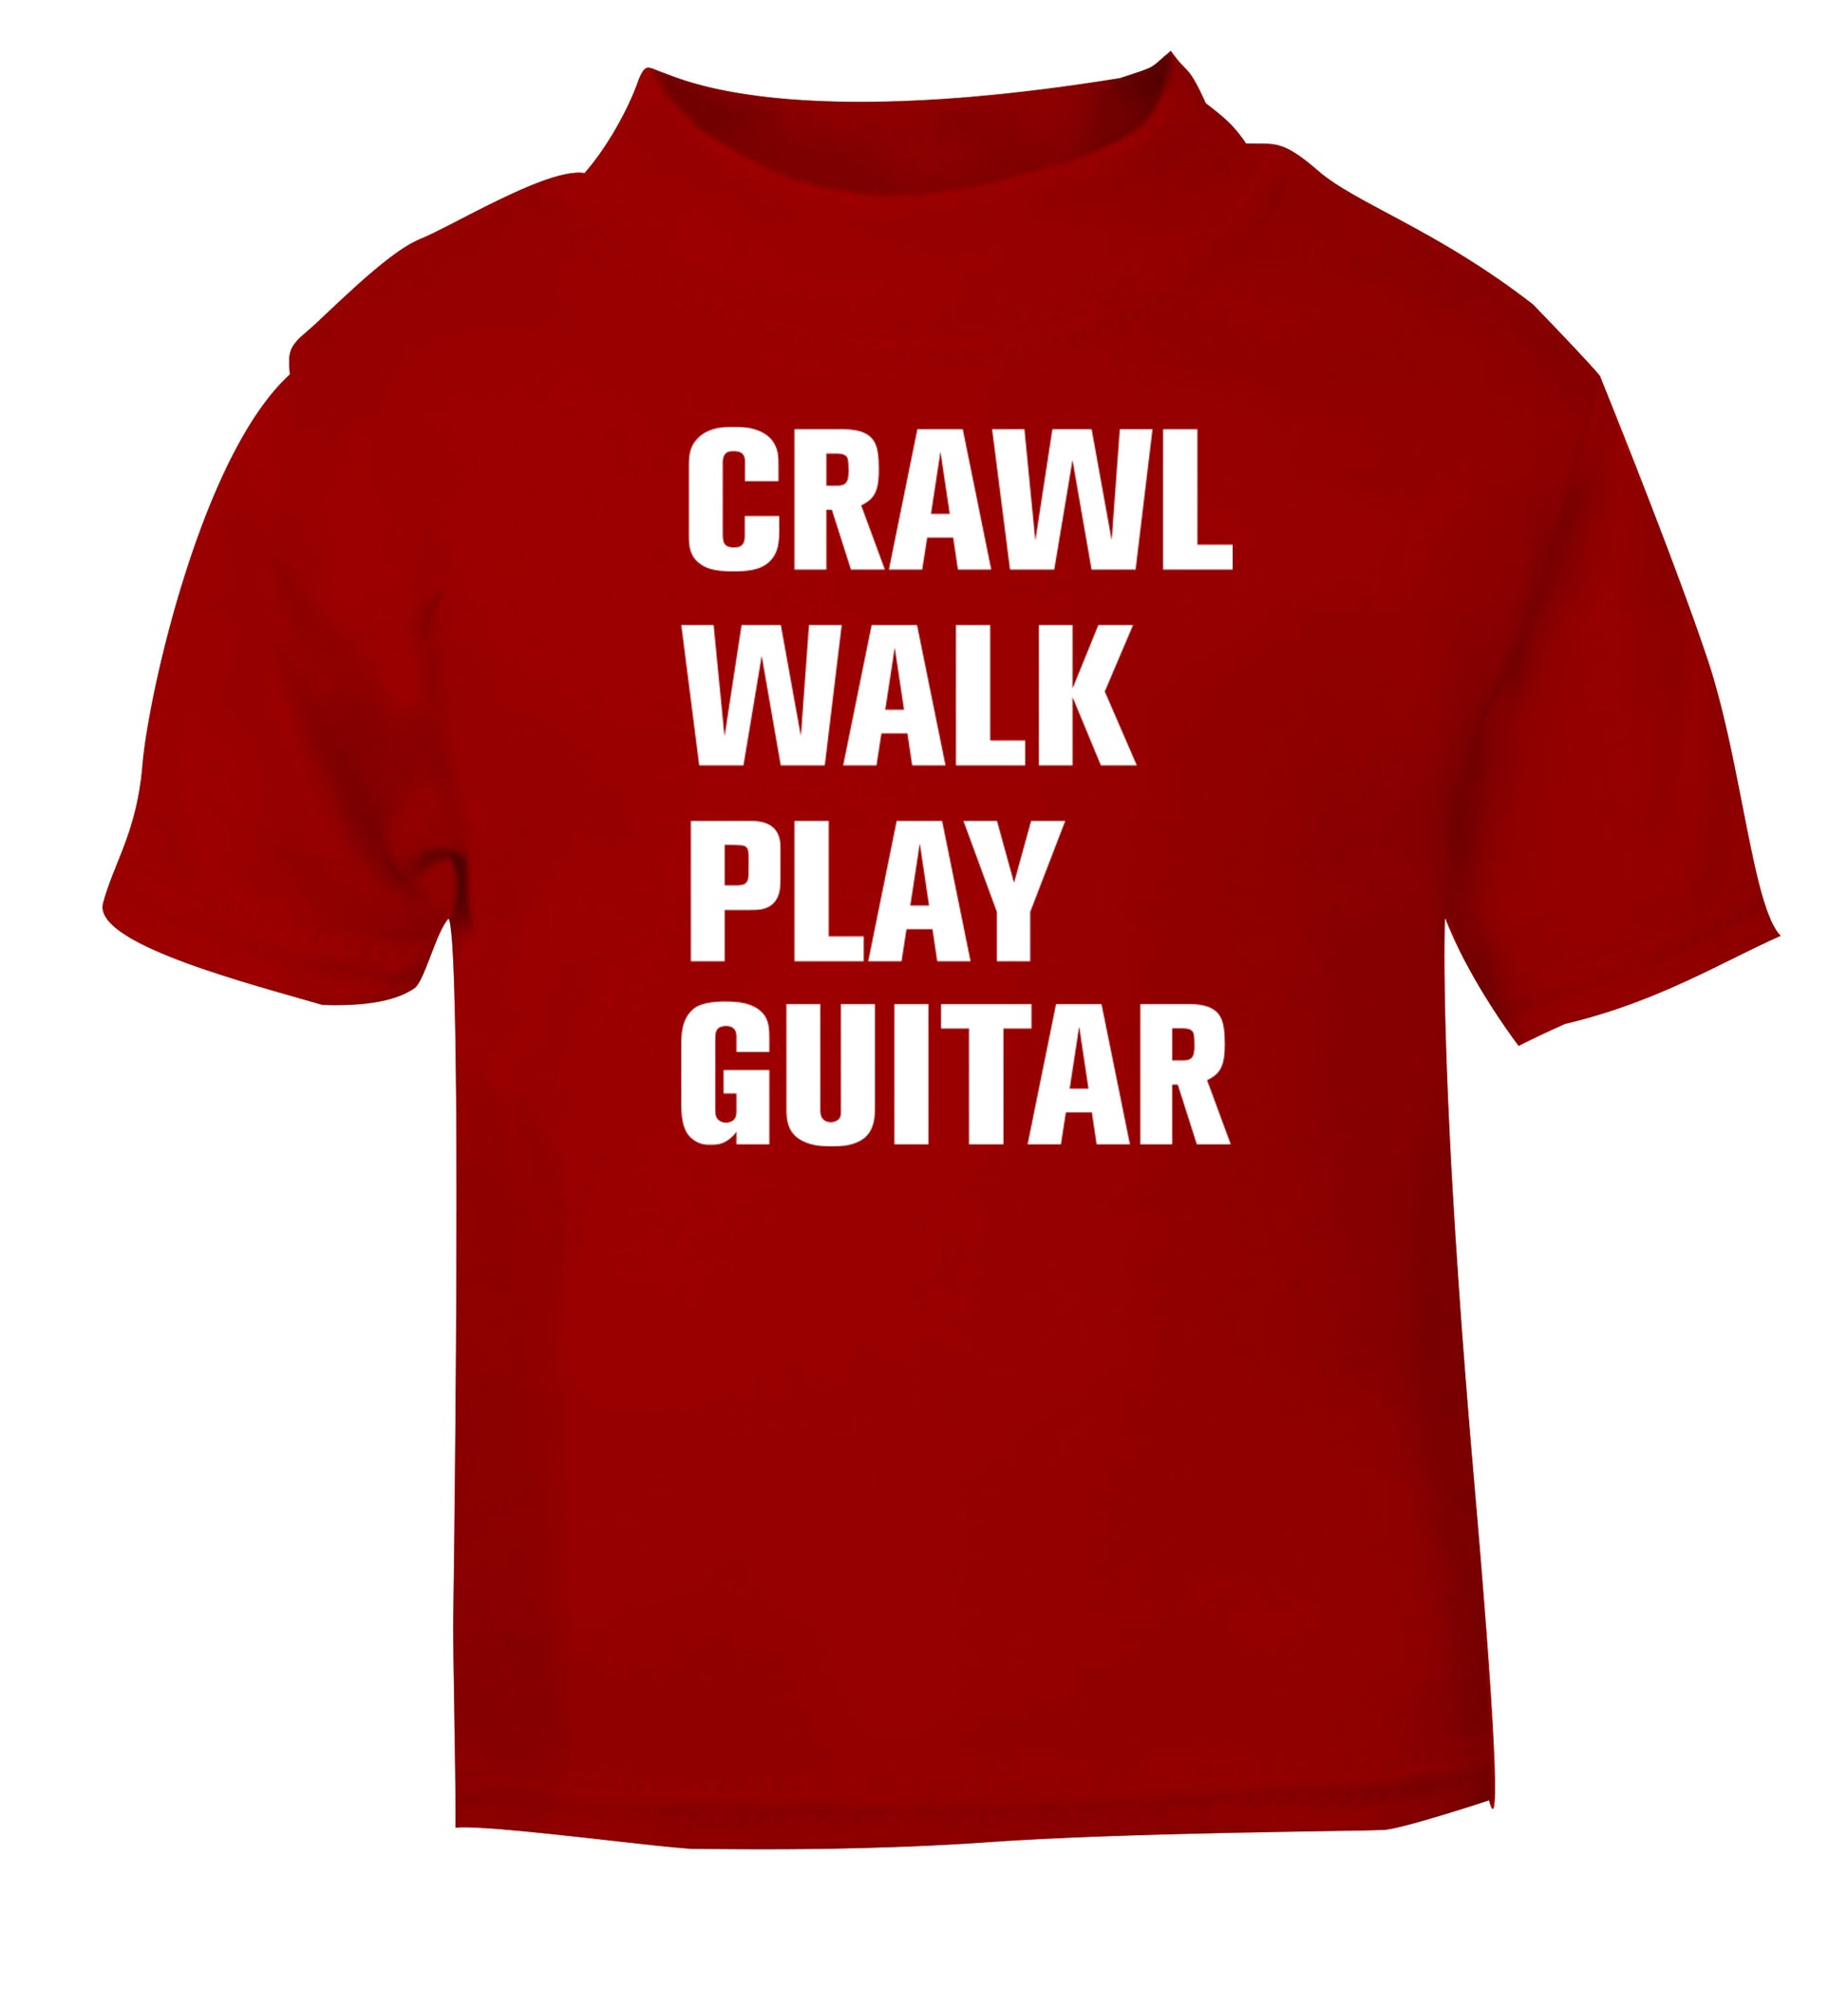 Crawl walk play guitar red Baby Toddler Tshirt 2 Years